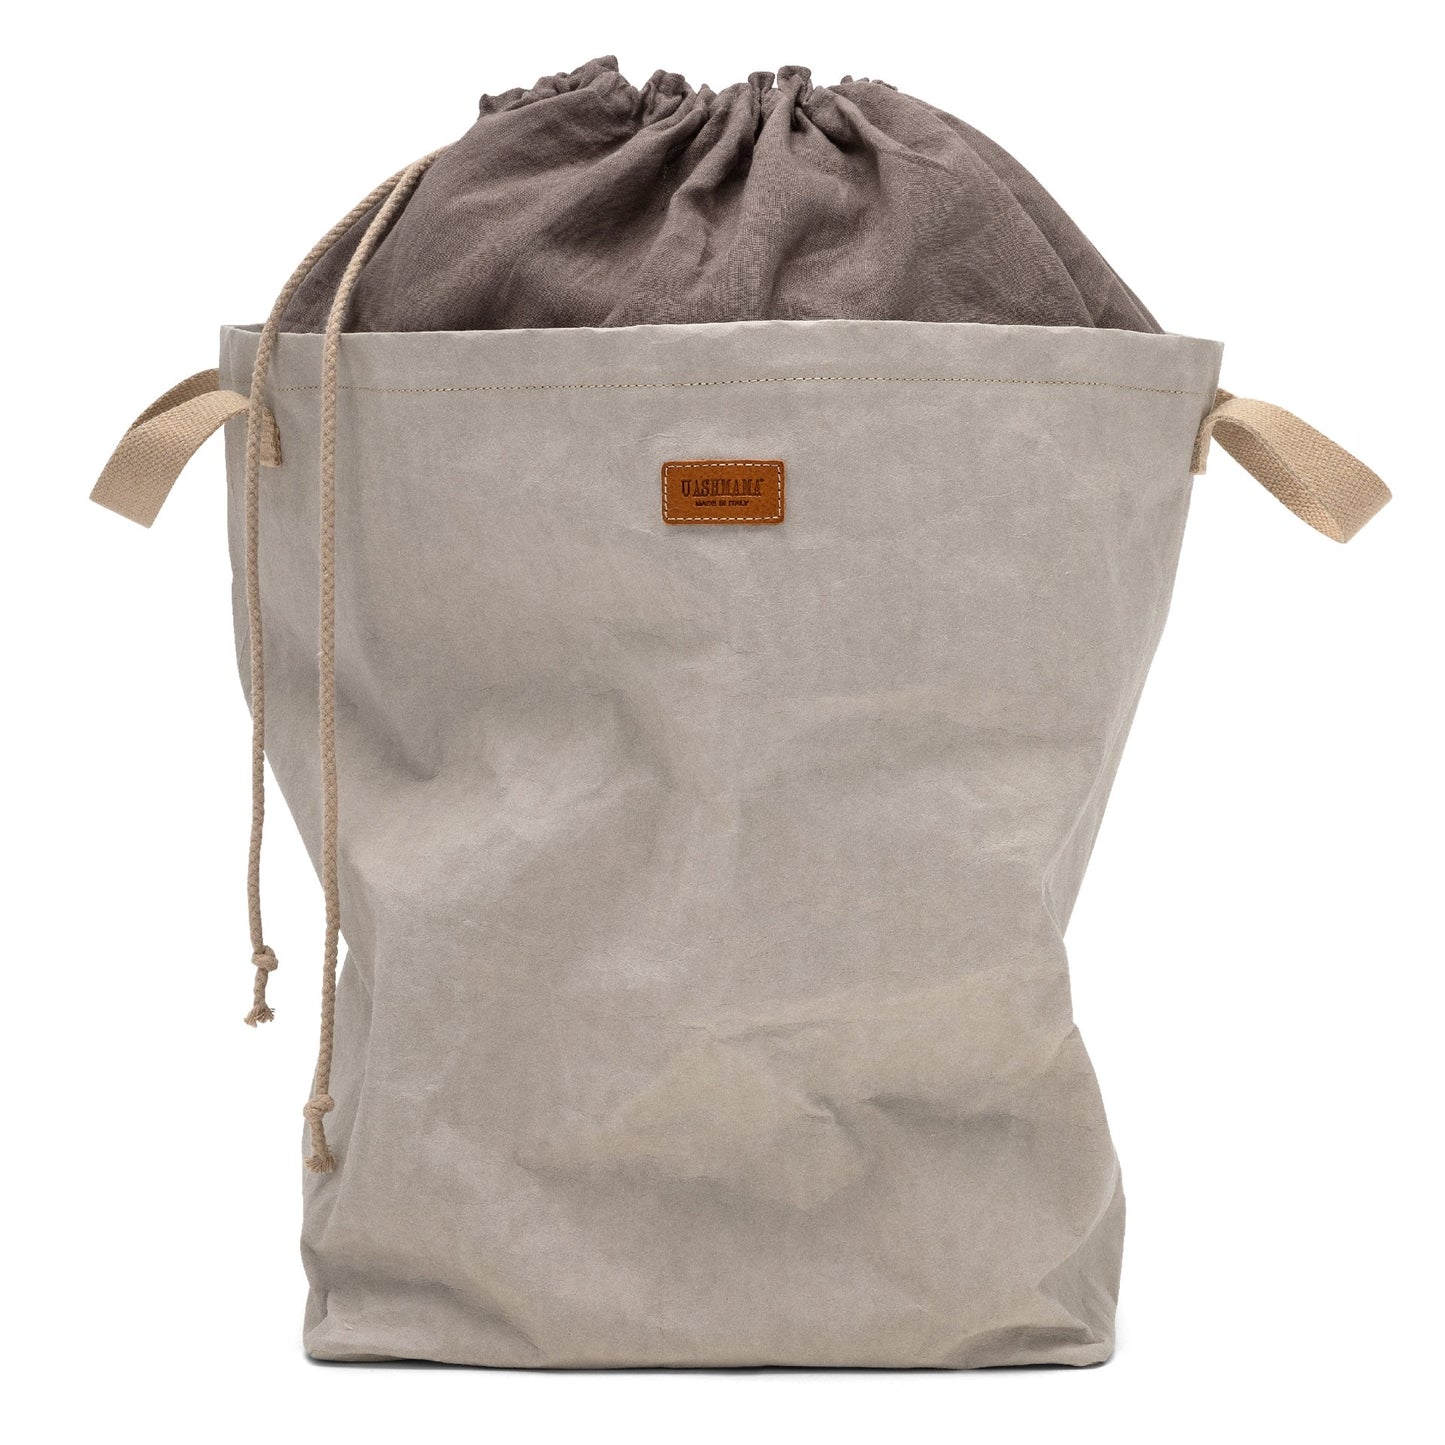 Uashmama Drawstring Laundry Bag, 9 Colors, Paper, Cotton, Linen on